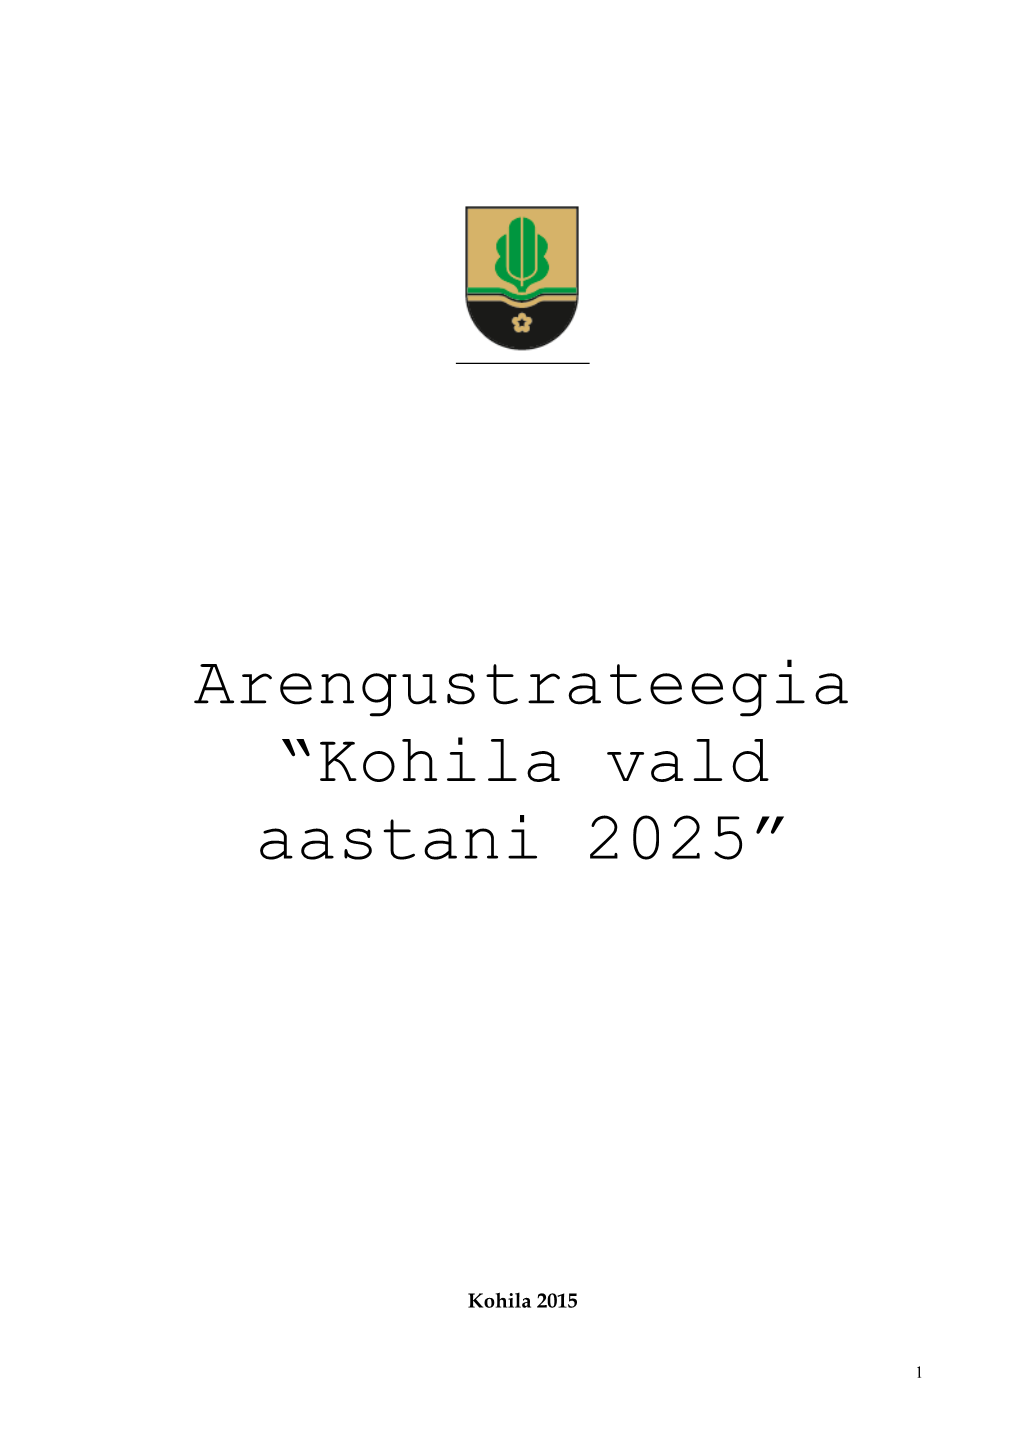 Kohila Valla Arengustarateegia 2025